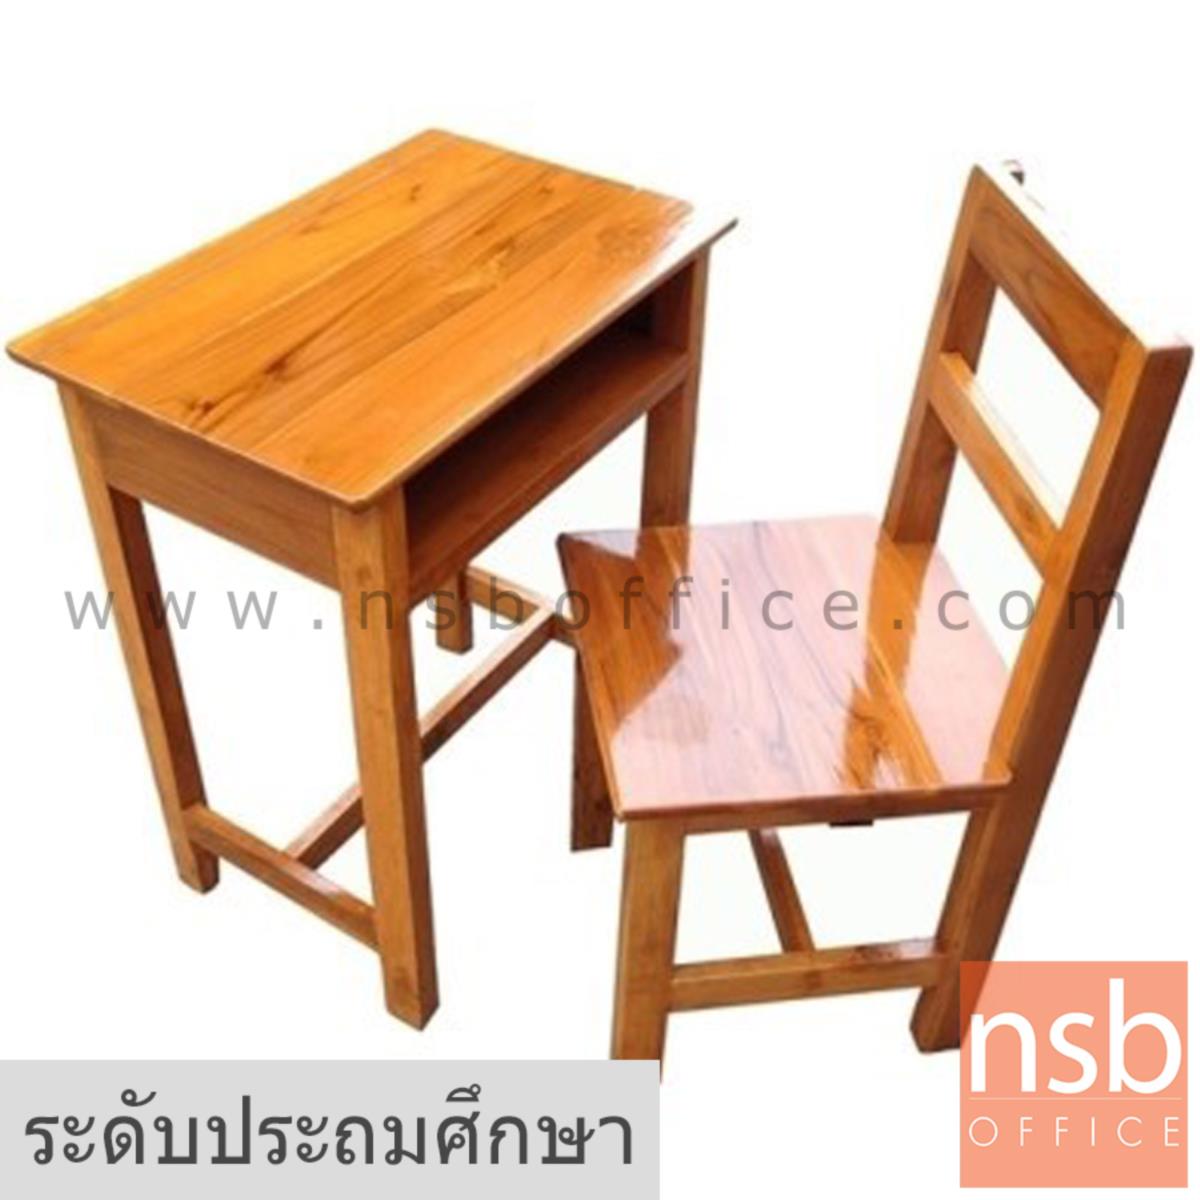 A17A066:ชุดโต๊ะและเก้าอี้นักเรียนไม้สักทองล้วน รุ่น MINNESSOTA (มินเนโซตา)  ระดับประถมศึกษา